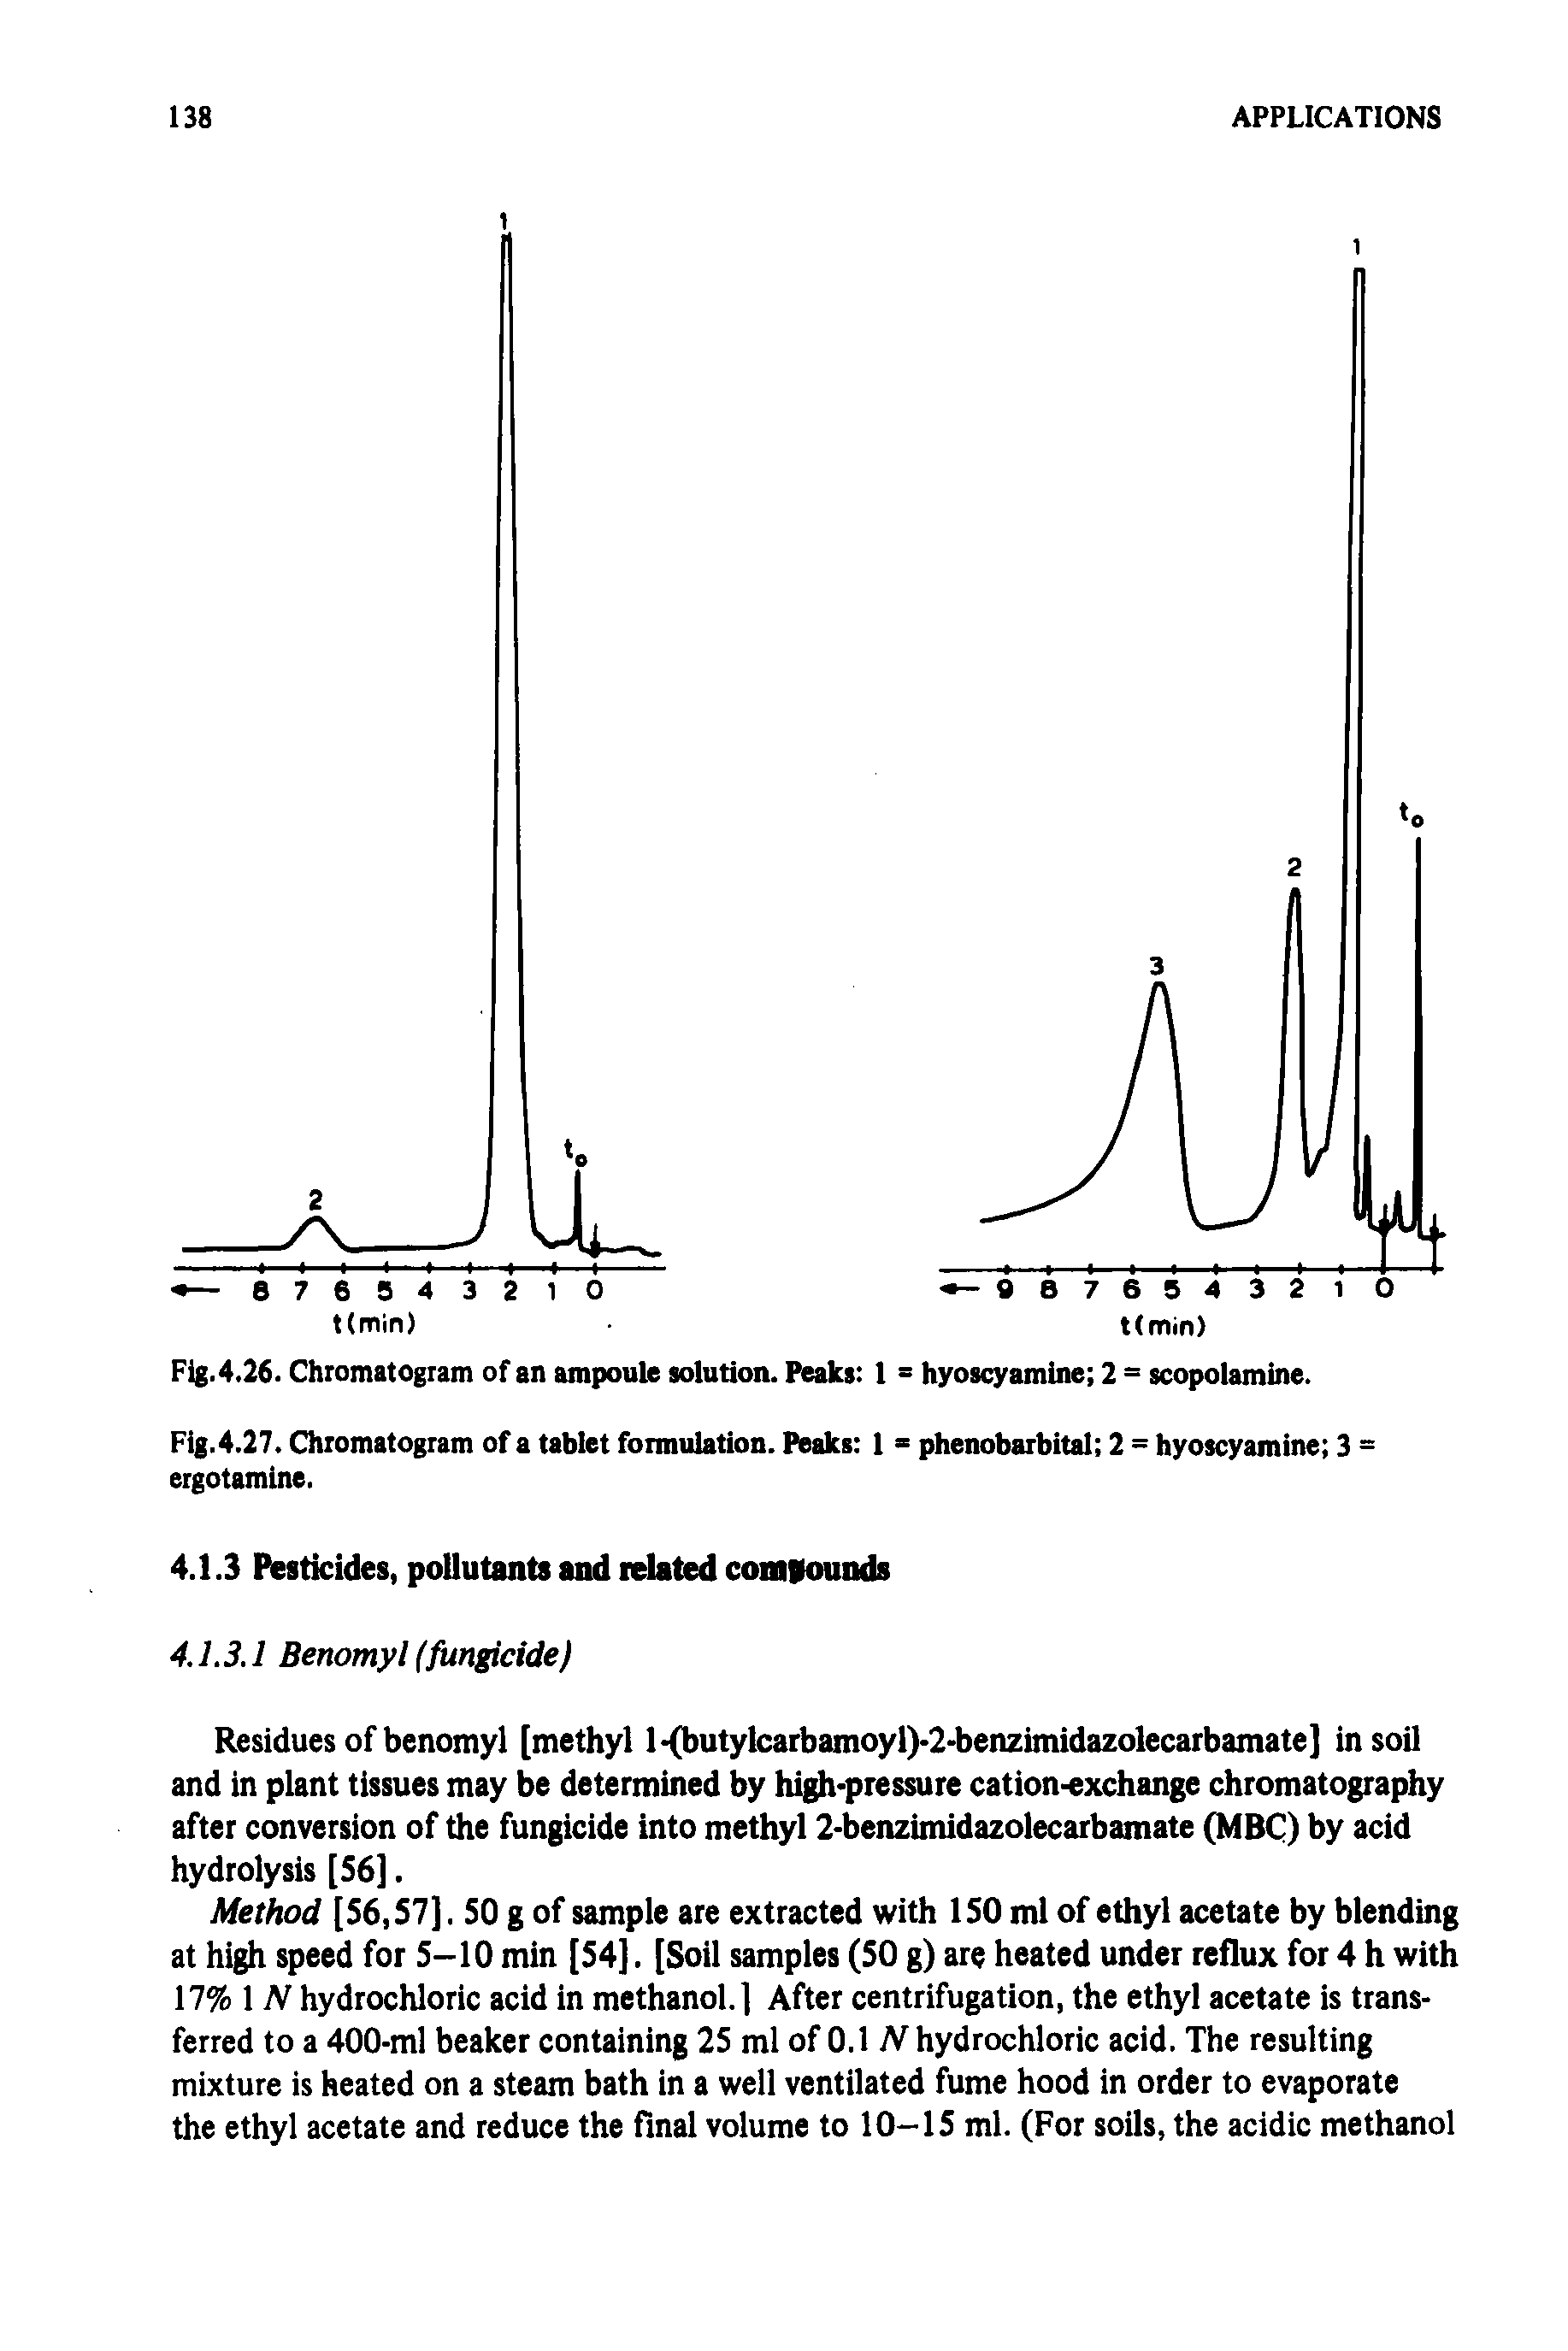 Fig.4.26. Chromatogram of an ampoule solution. Peaks 1 = hyoscyamine 2 = scopolamine.